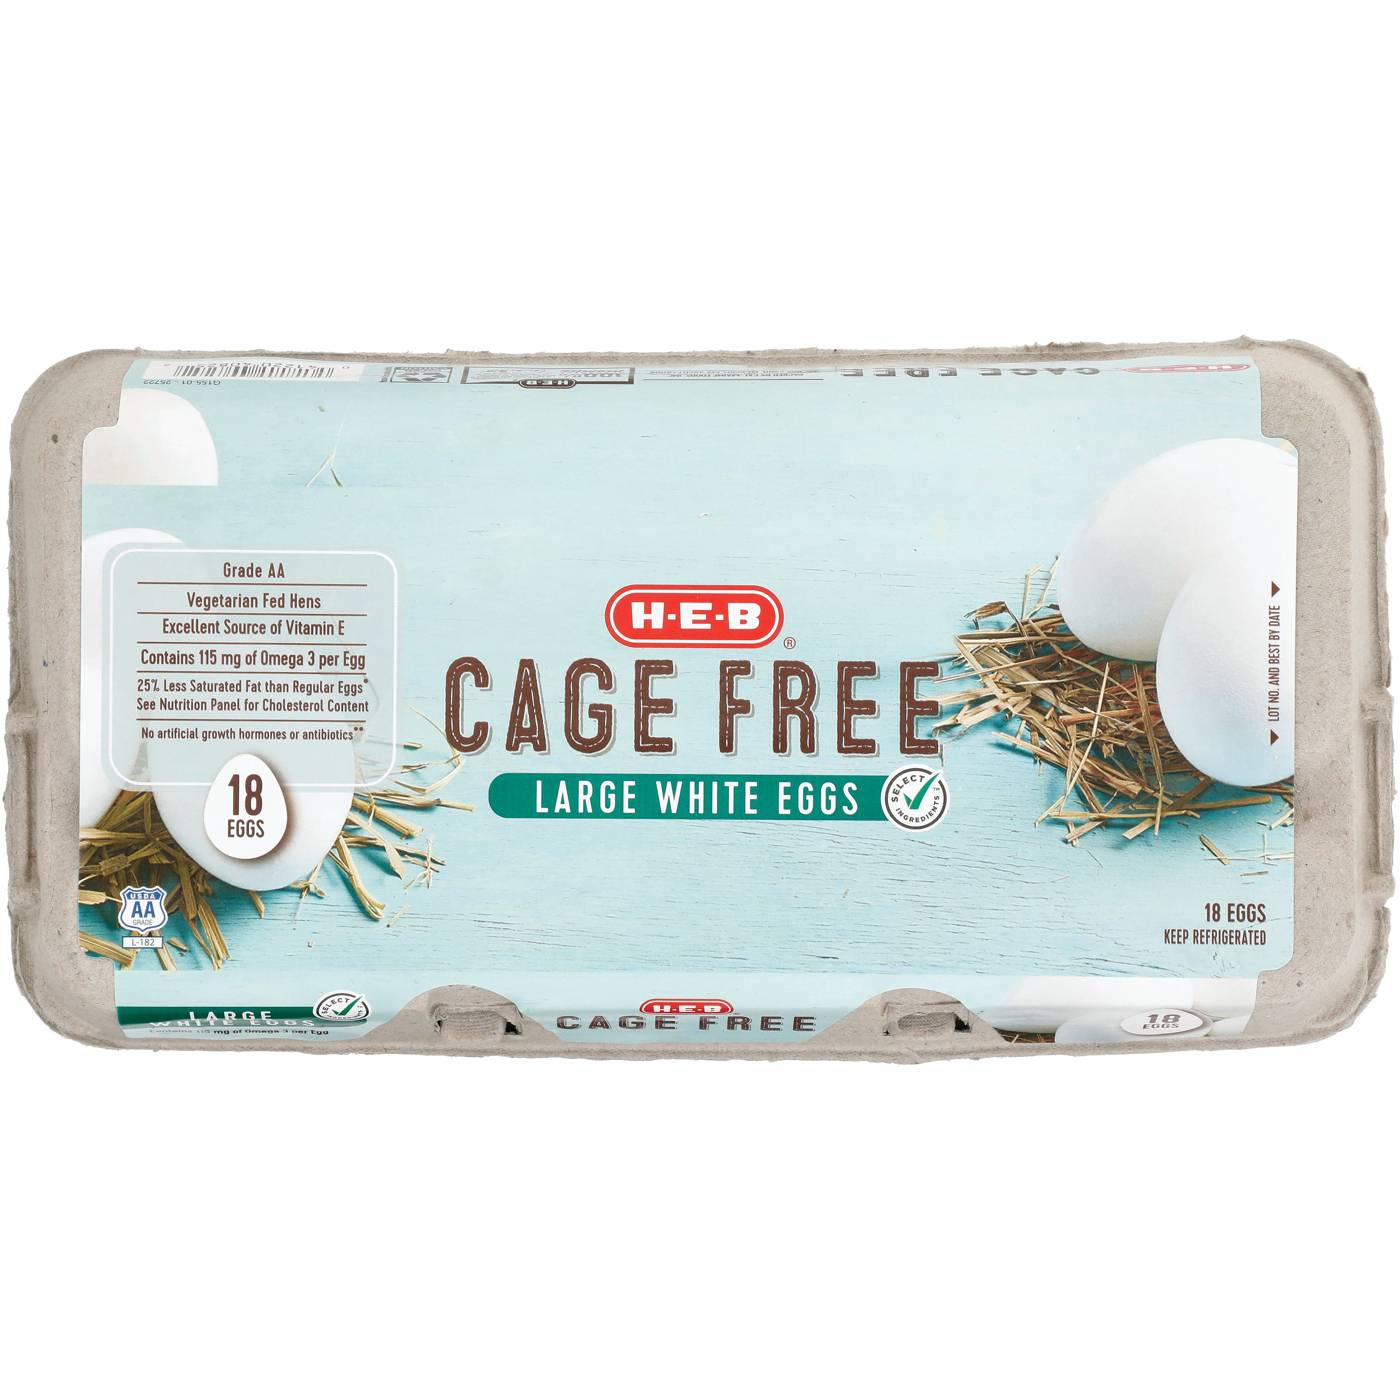 H-E-B Grade AA Cage Free Large White Eggs; image 2 of 2